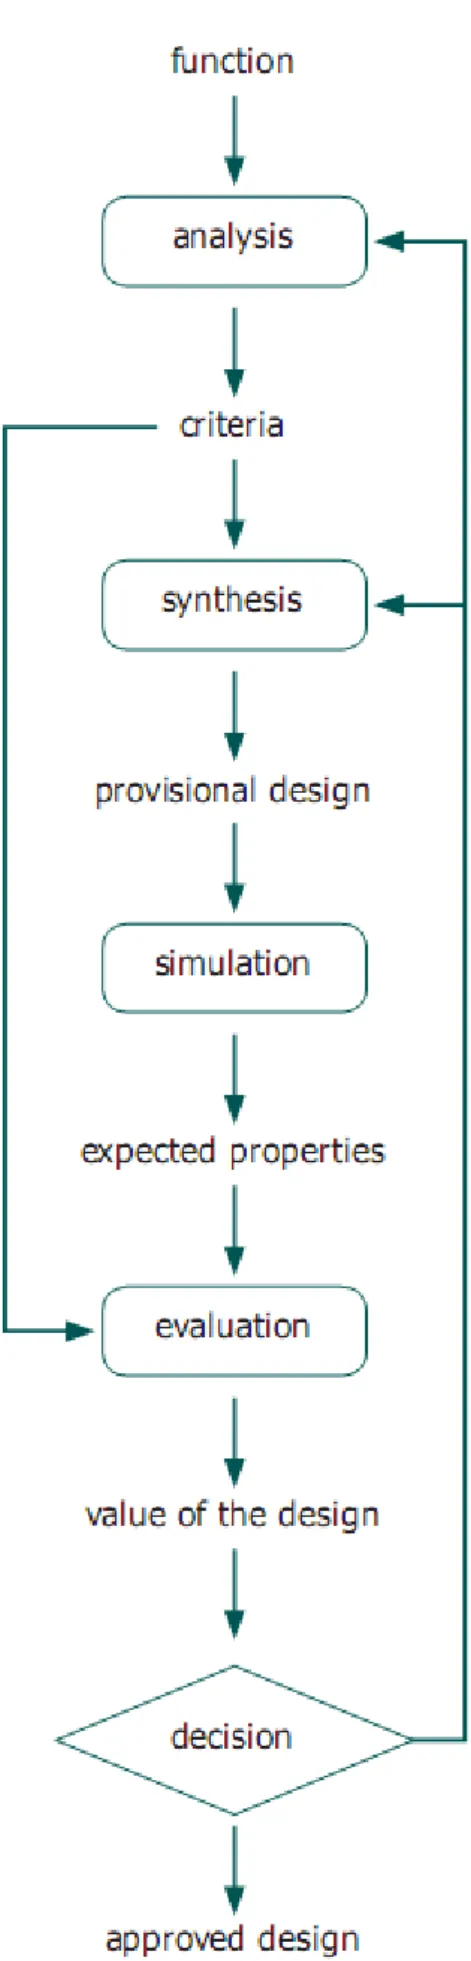 Figure 15 - Roozenburg and Eekels (1995) design process 